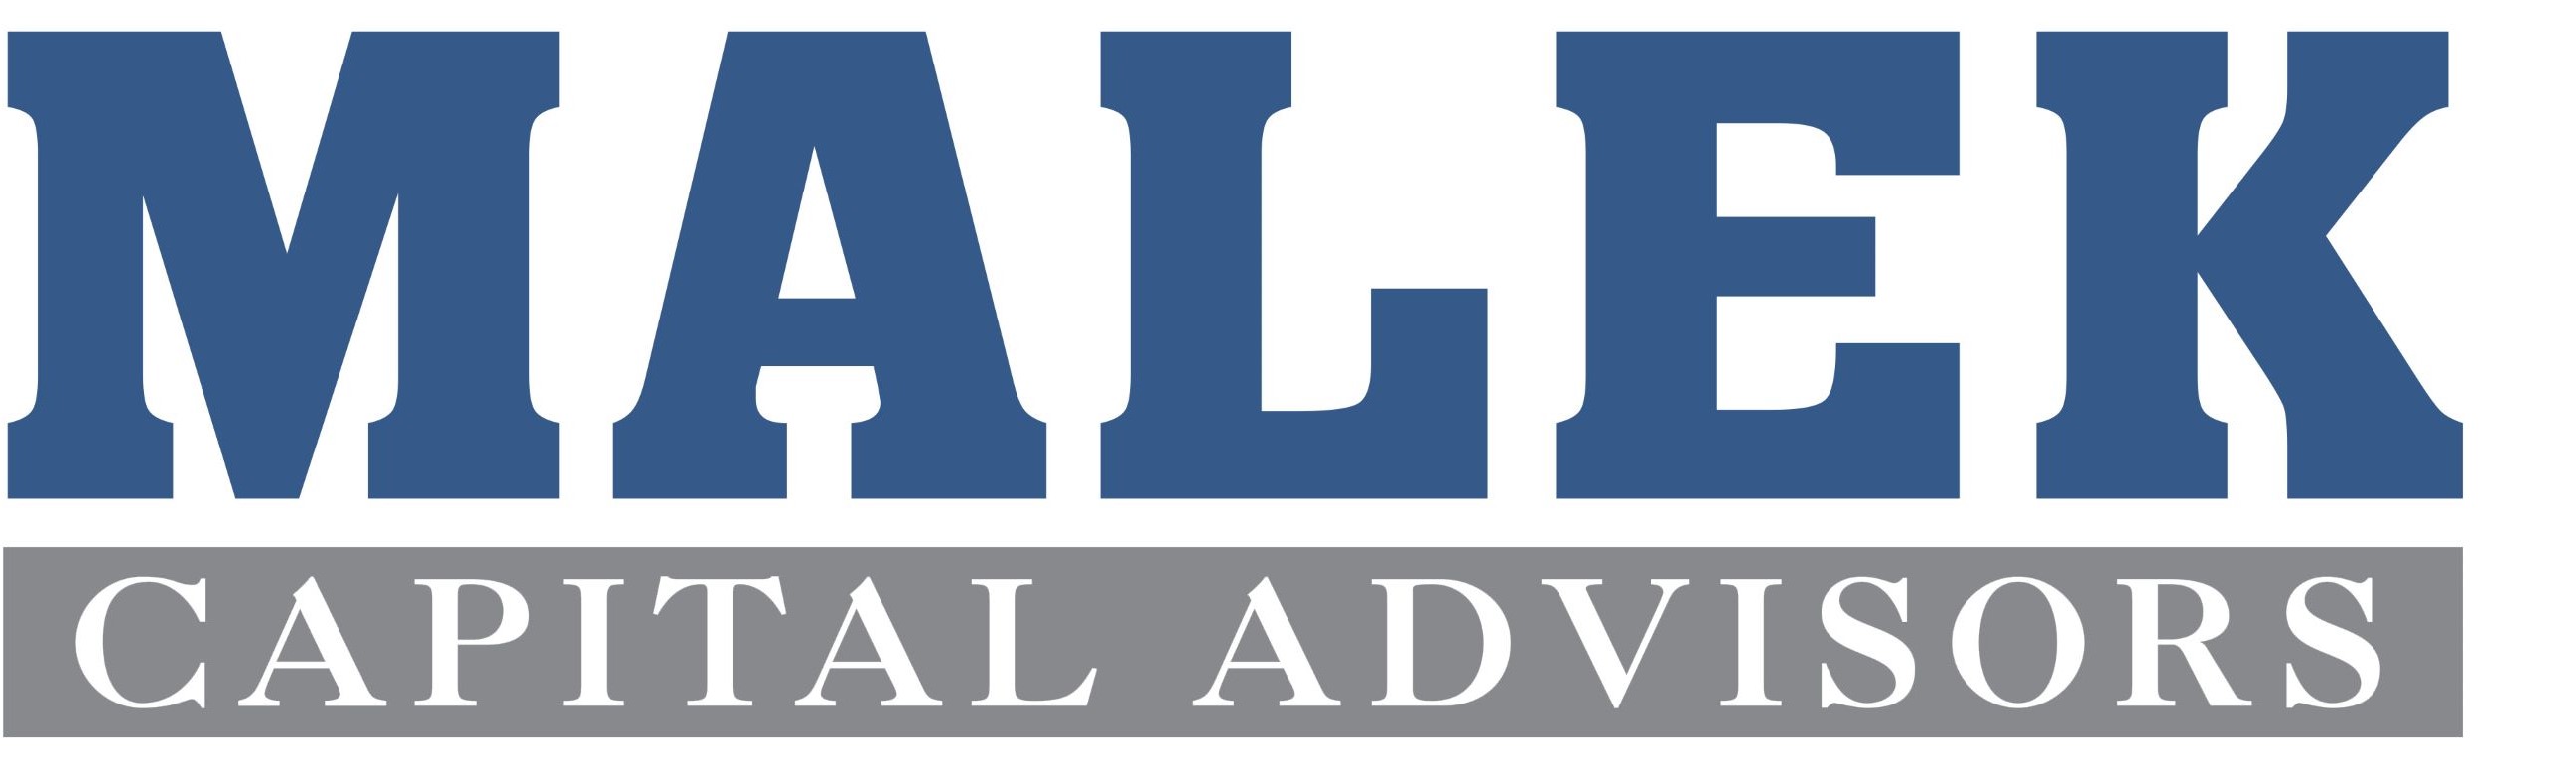 Malek Capital Advisors 
LLC